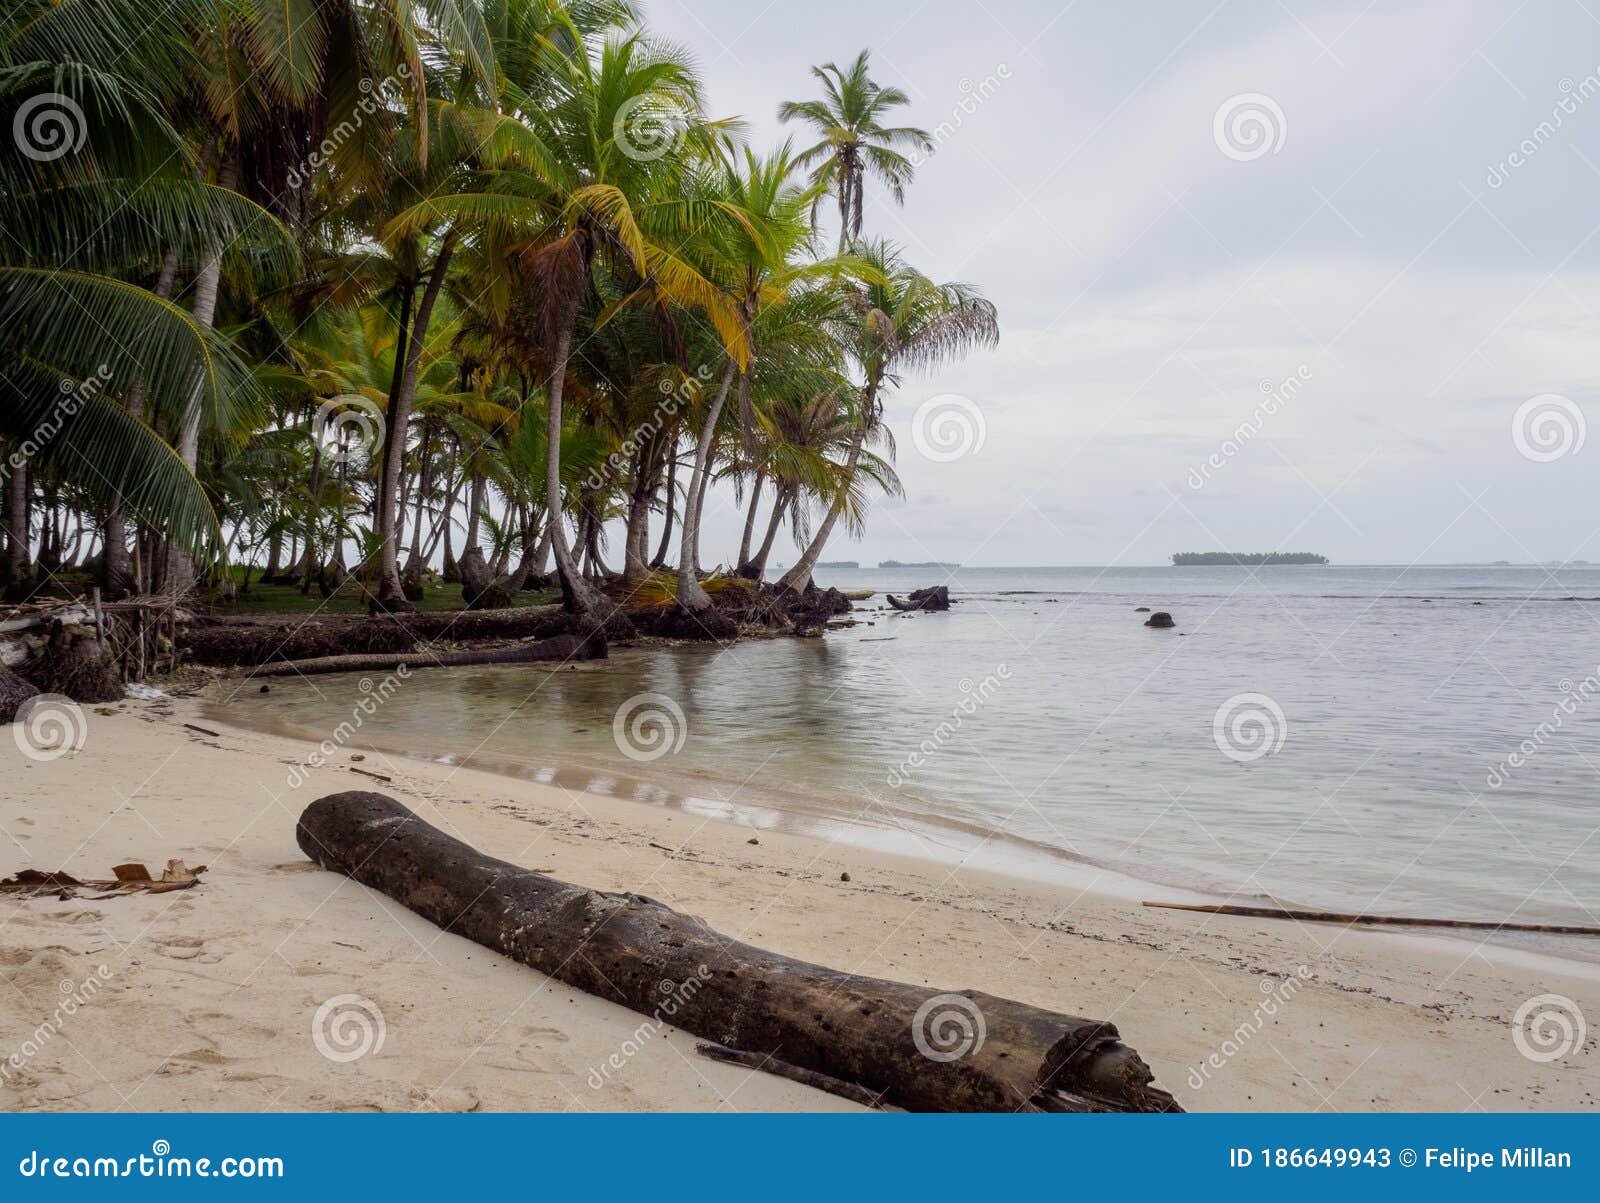 exotic beach at sanblas islands panama